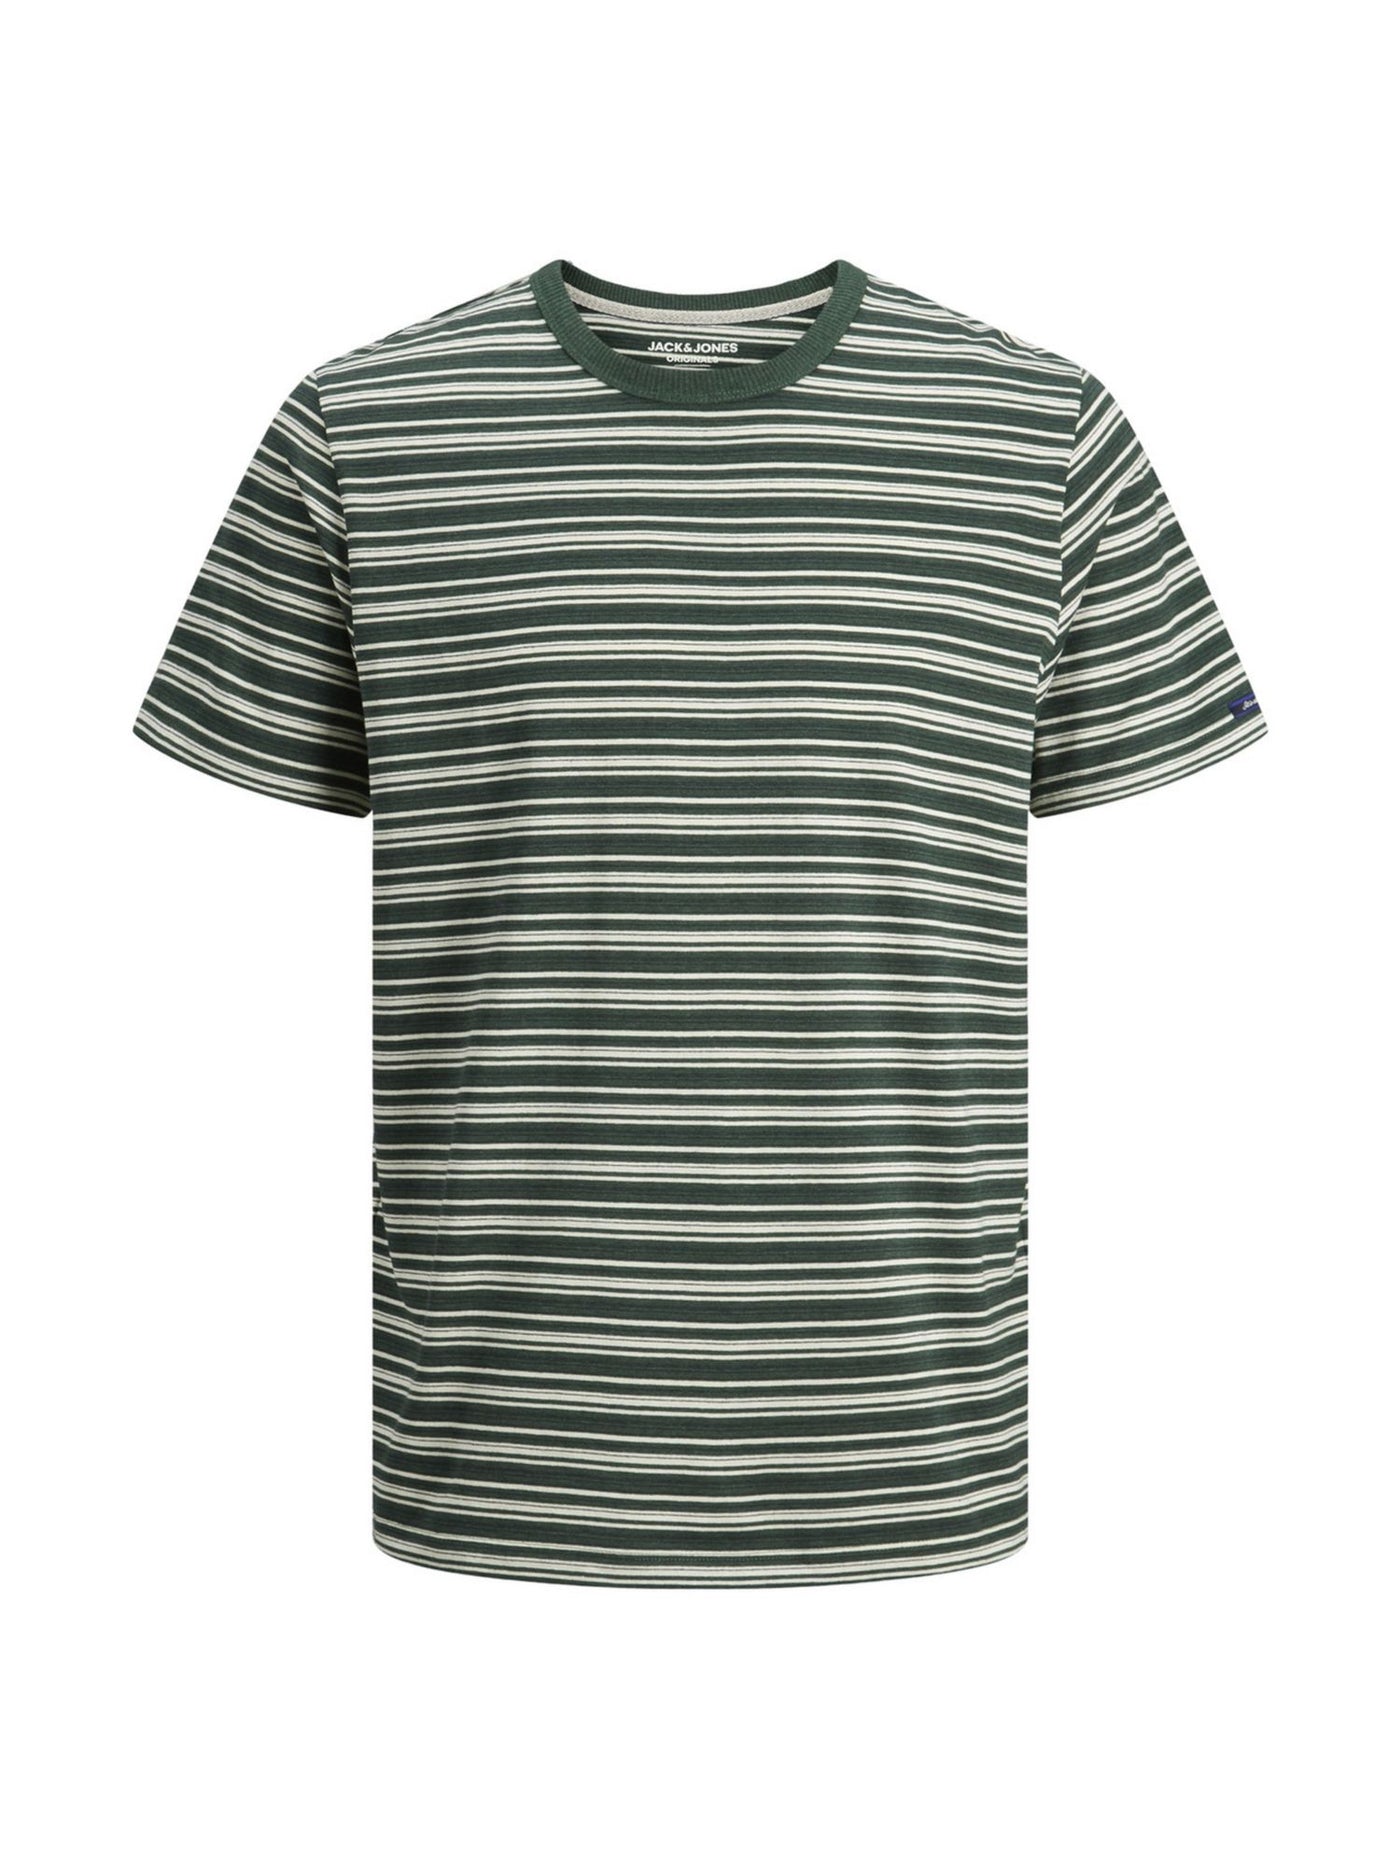 Jack&Jones Mens Green Striped Short Sleeve Classic Fit T-Shirt S